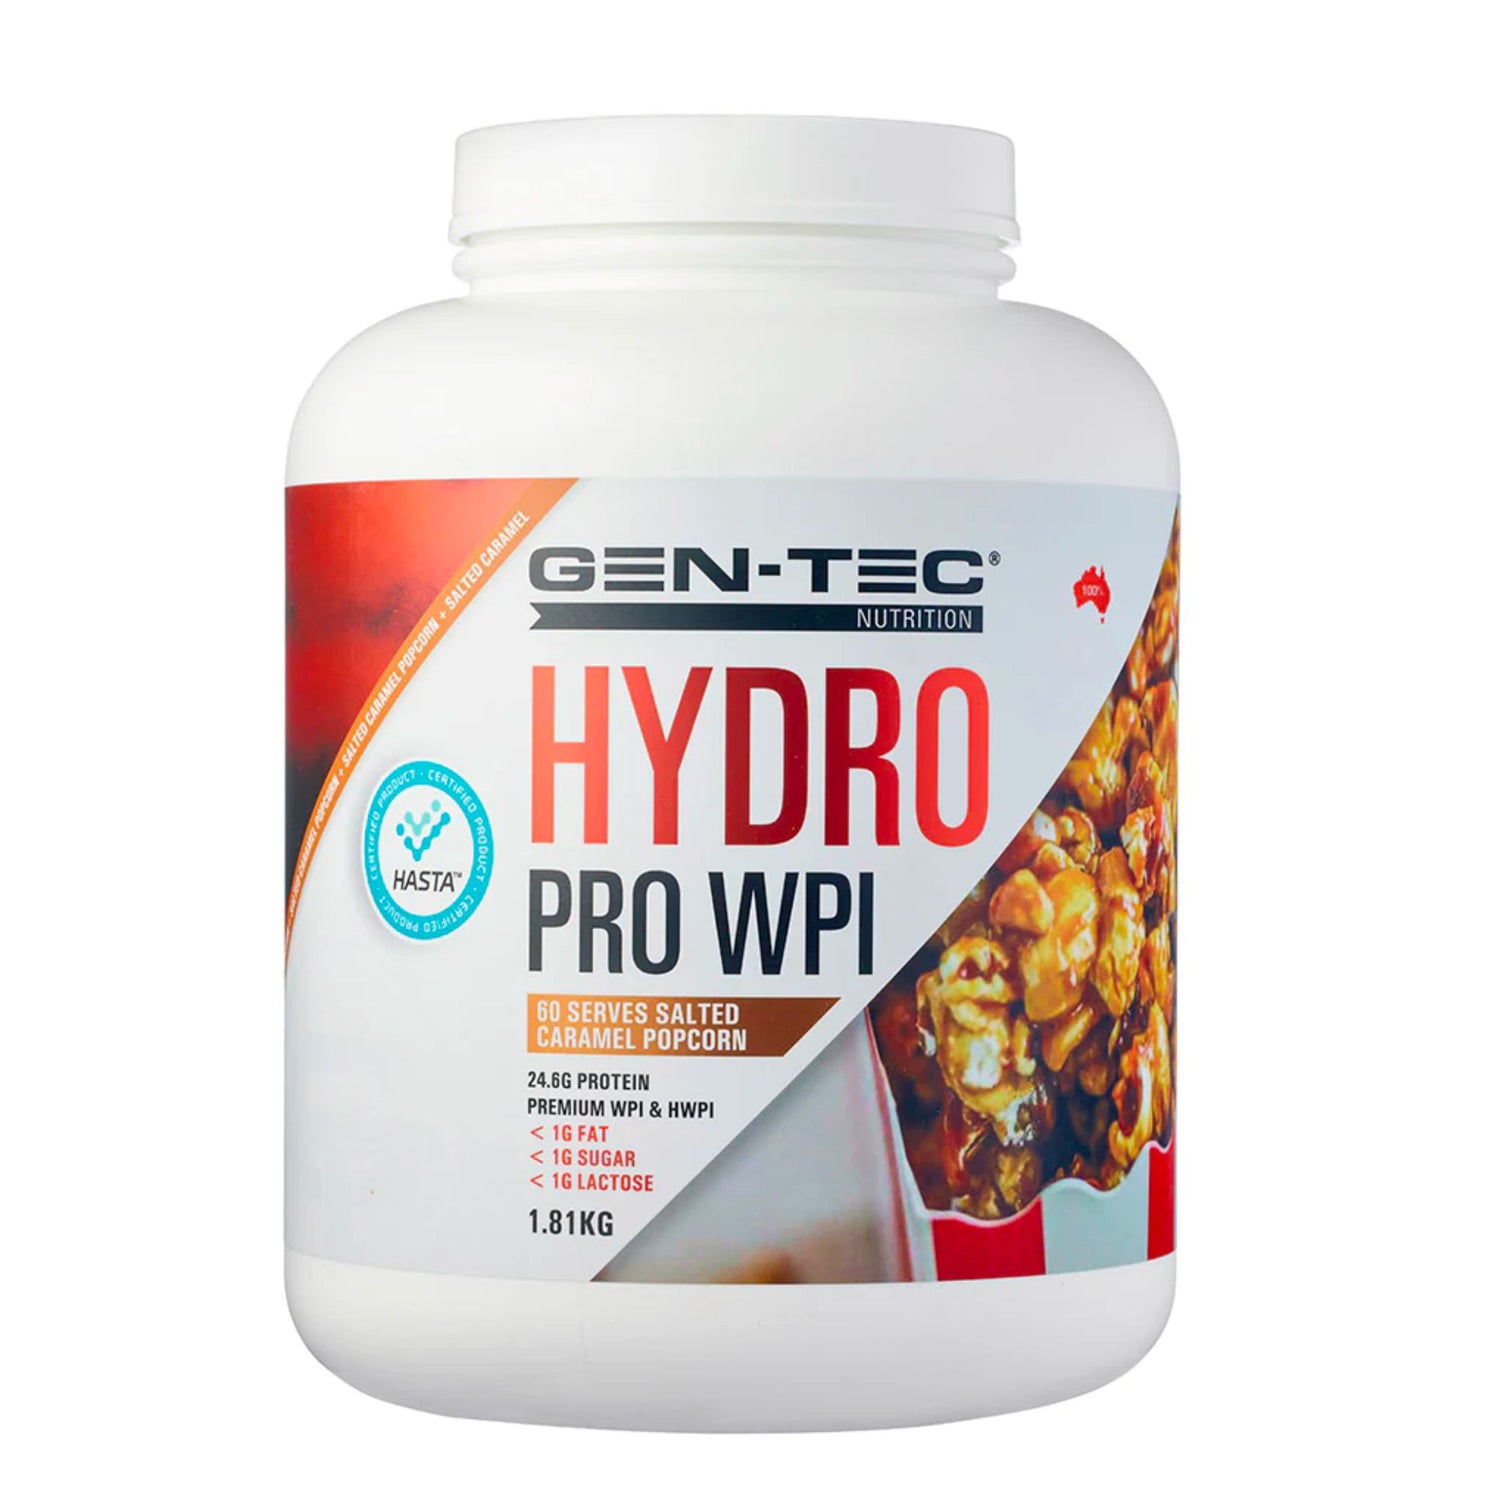 Gentec Hydro Pro Protein Powder Whey Protein Isolate